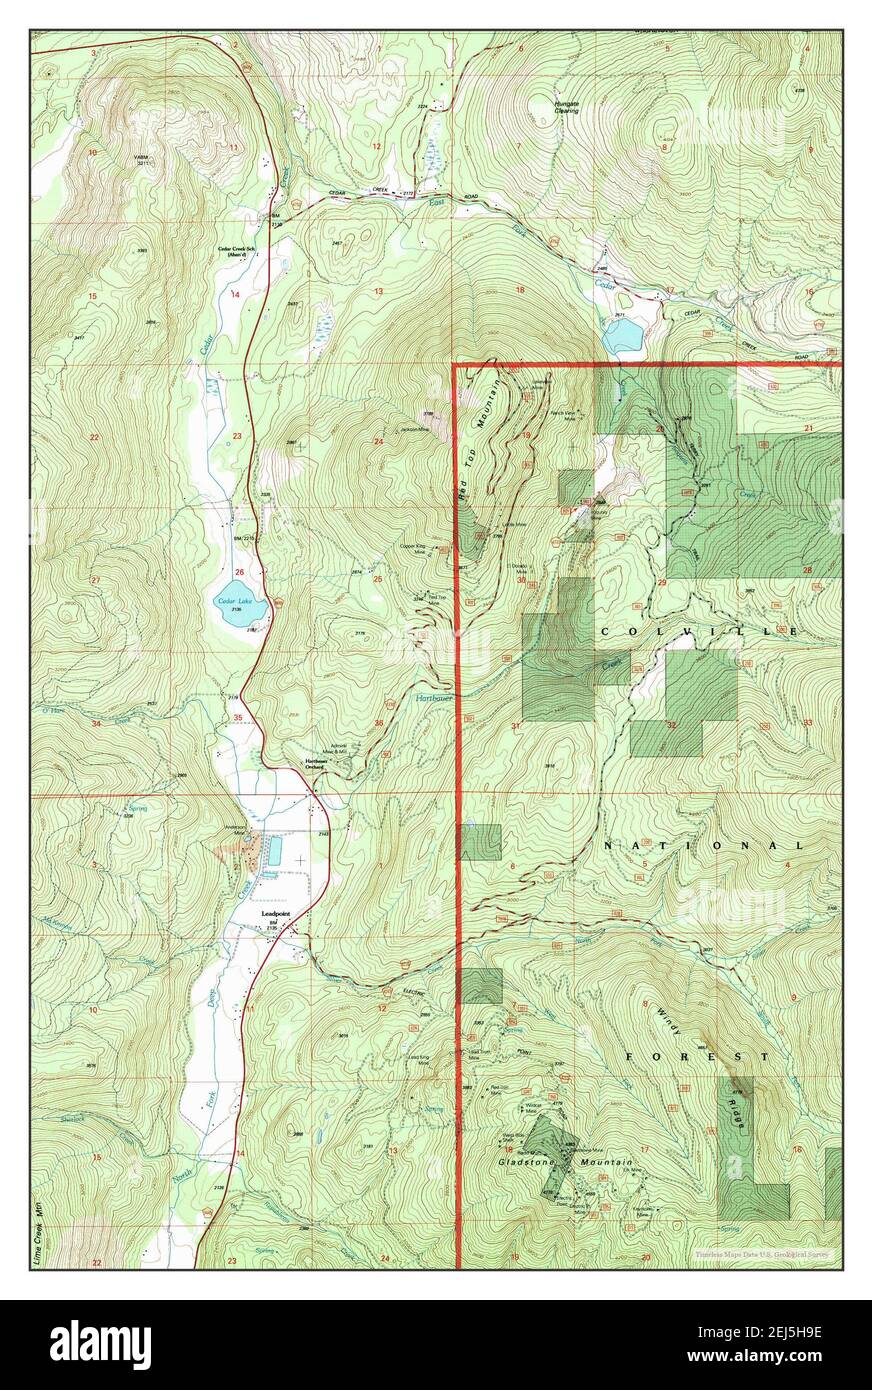 Leadpoint, Washington, map 1992, 1:24000, United States of America by Timeless Maps, data U.S. Geological Survey Stock Photo